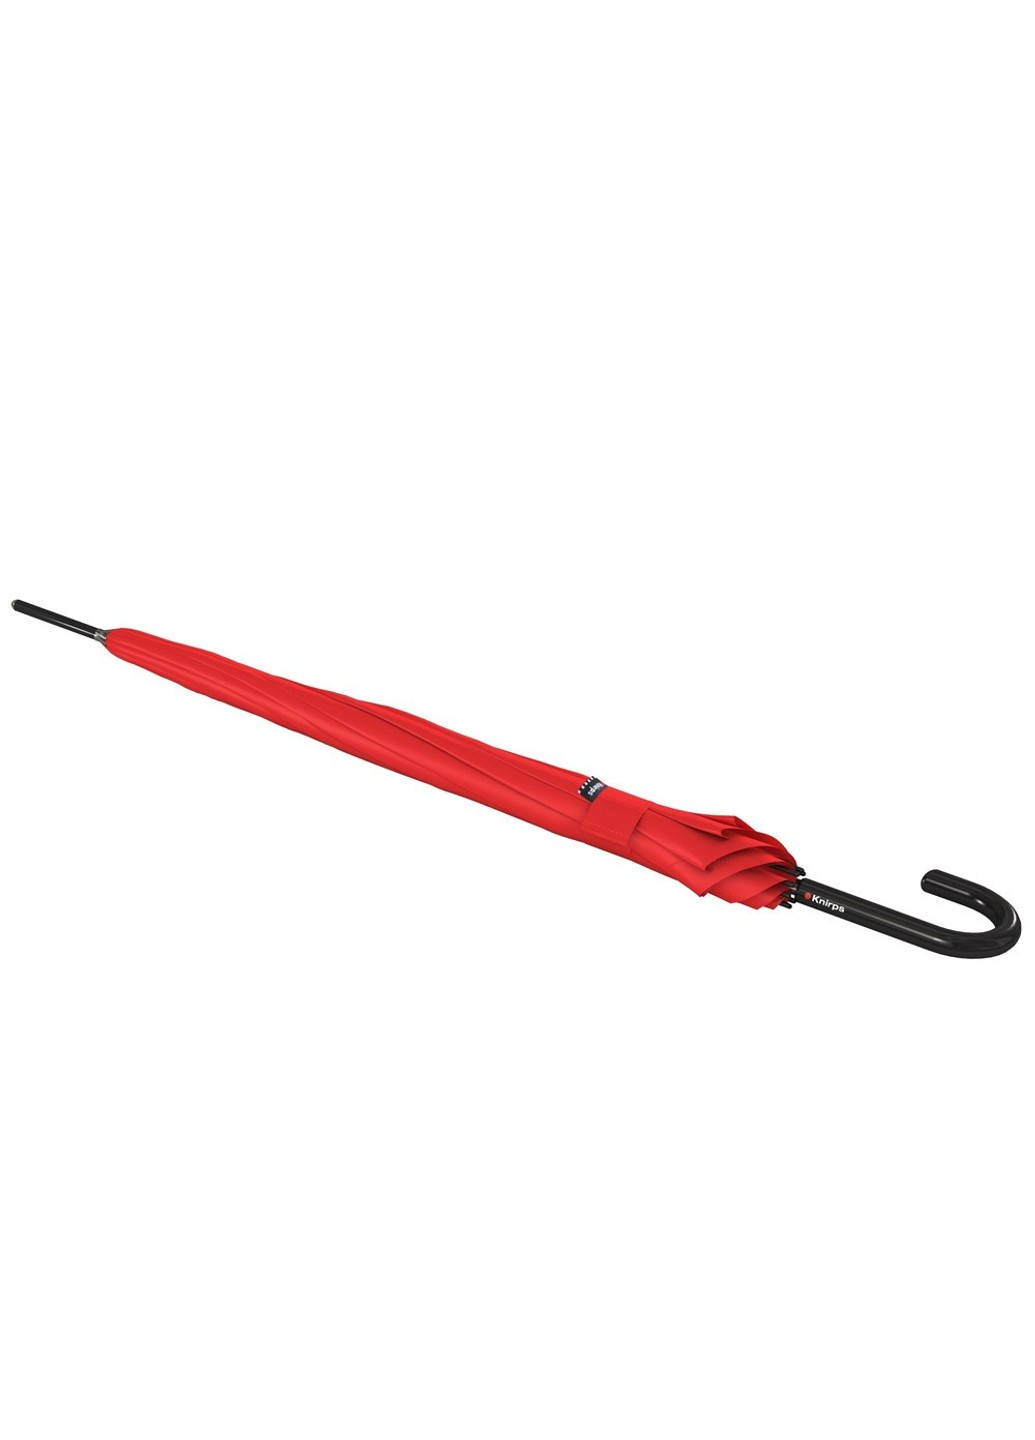 Зонт-трость полуавтомат A.760 Stick Automatic Red Kn96 7760 1501 Knirps (262449192)